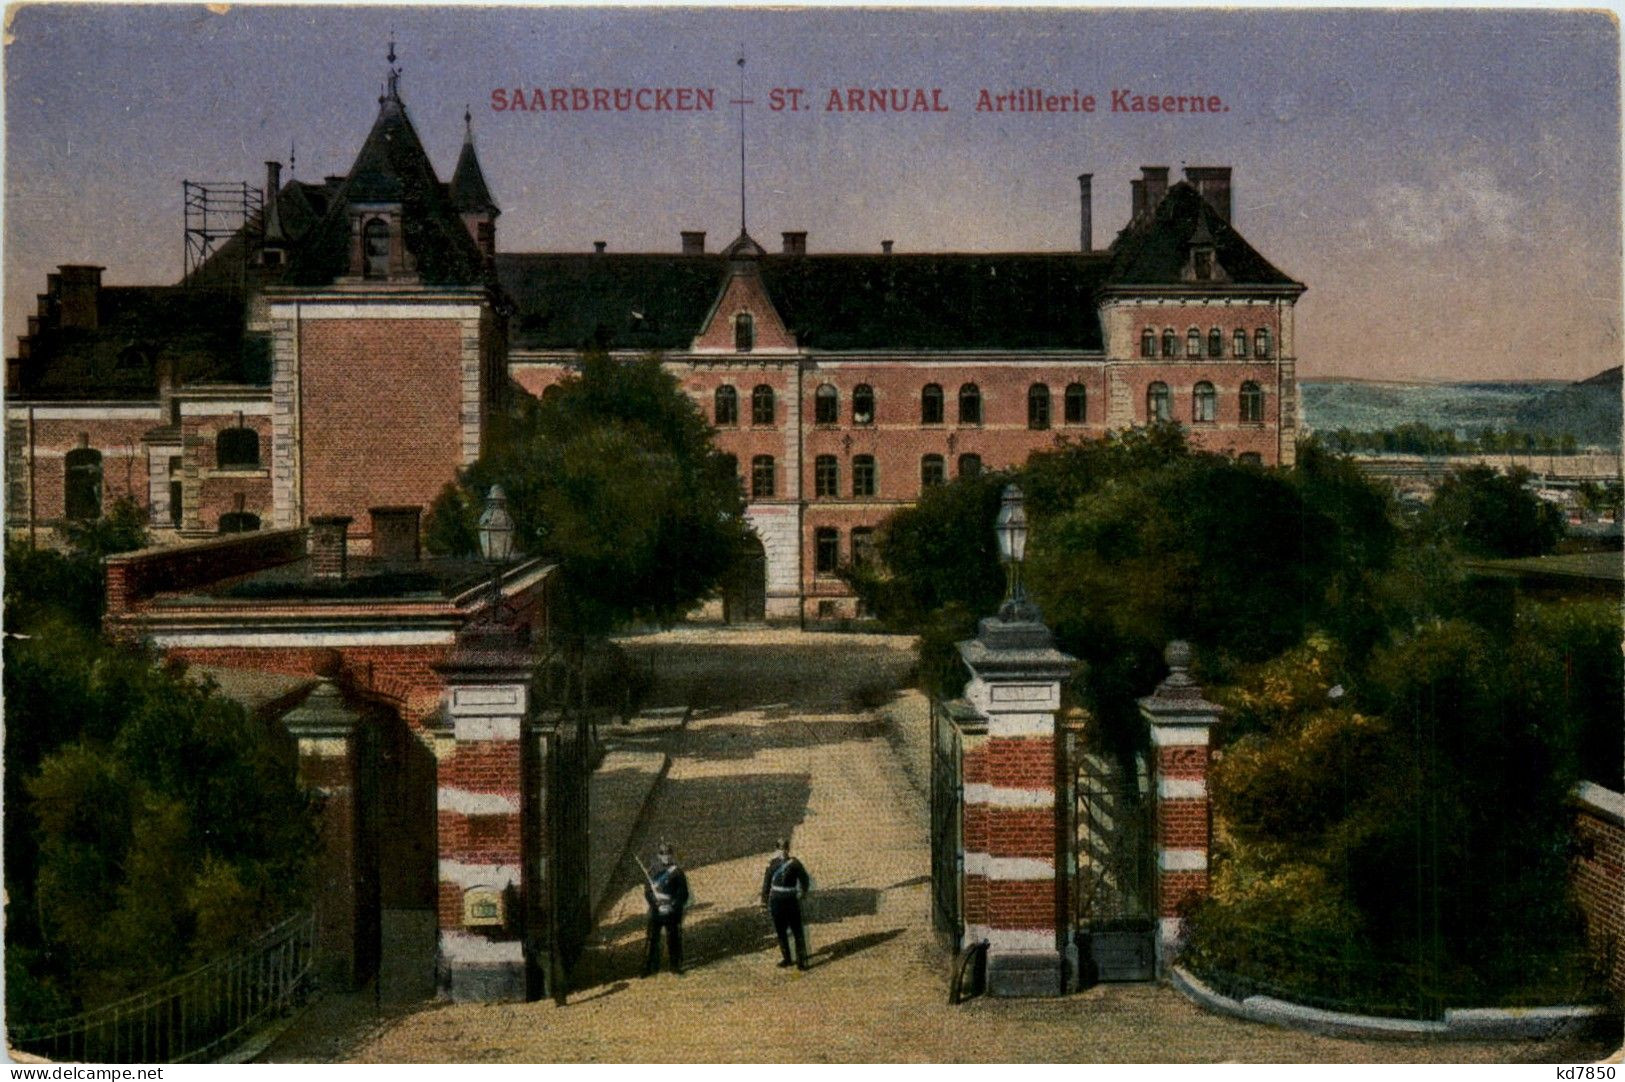 Saarbrücken - St. Arnual Artillerie Kaserne - Saarbrücken